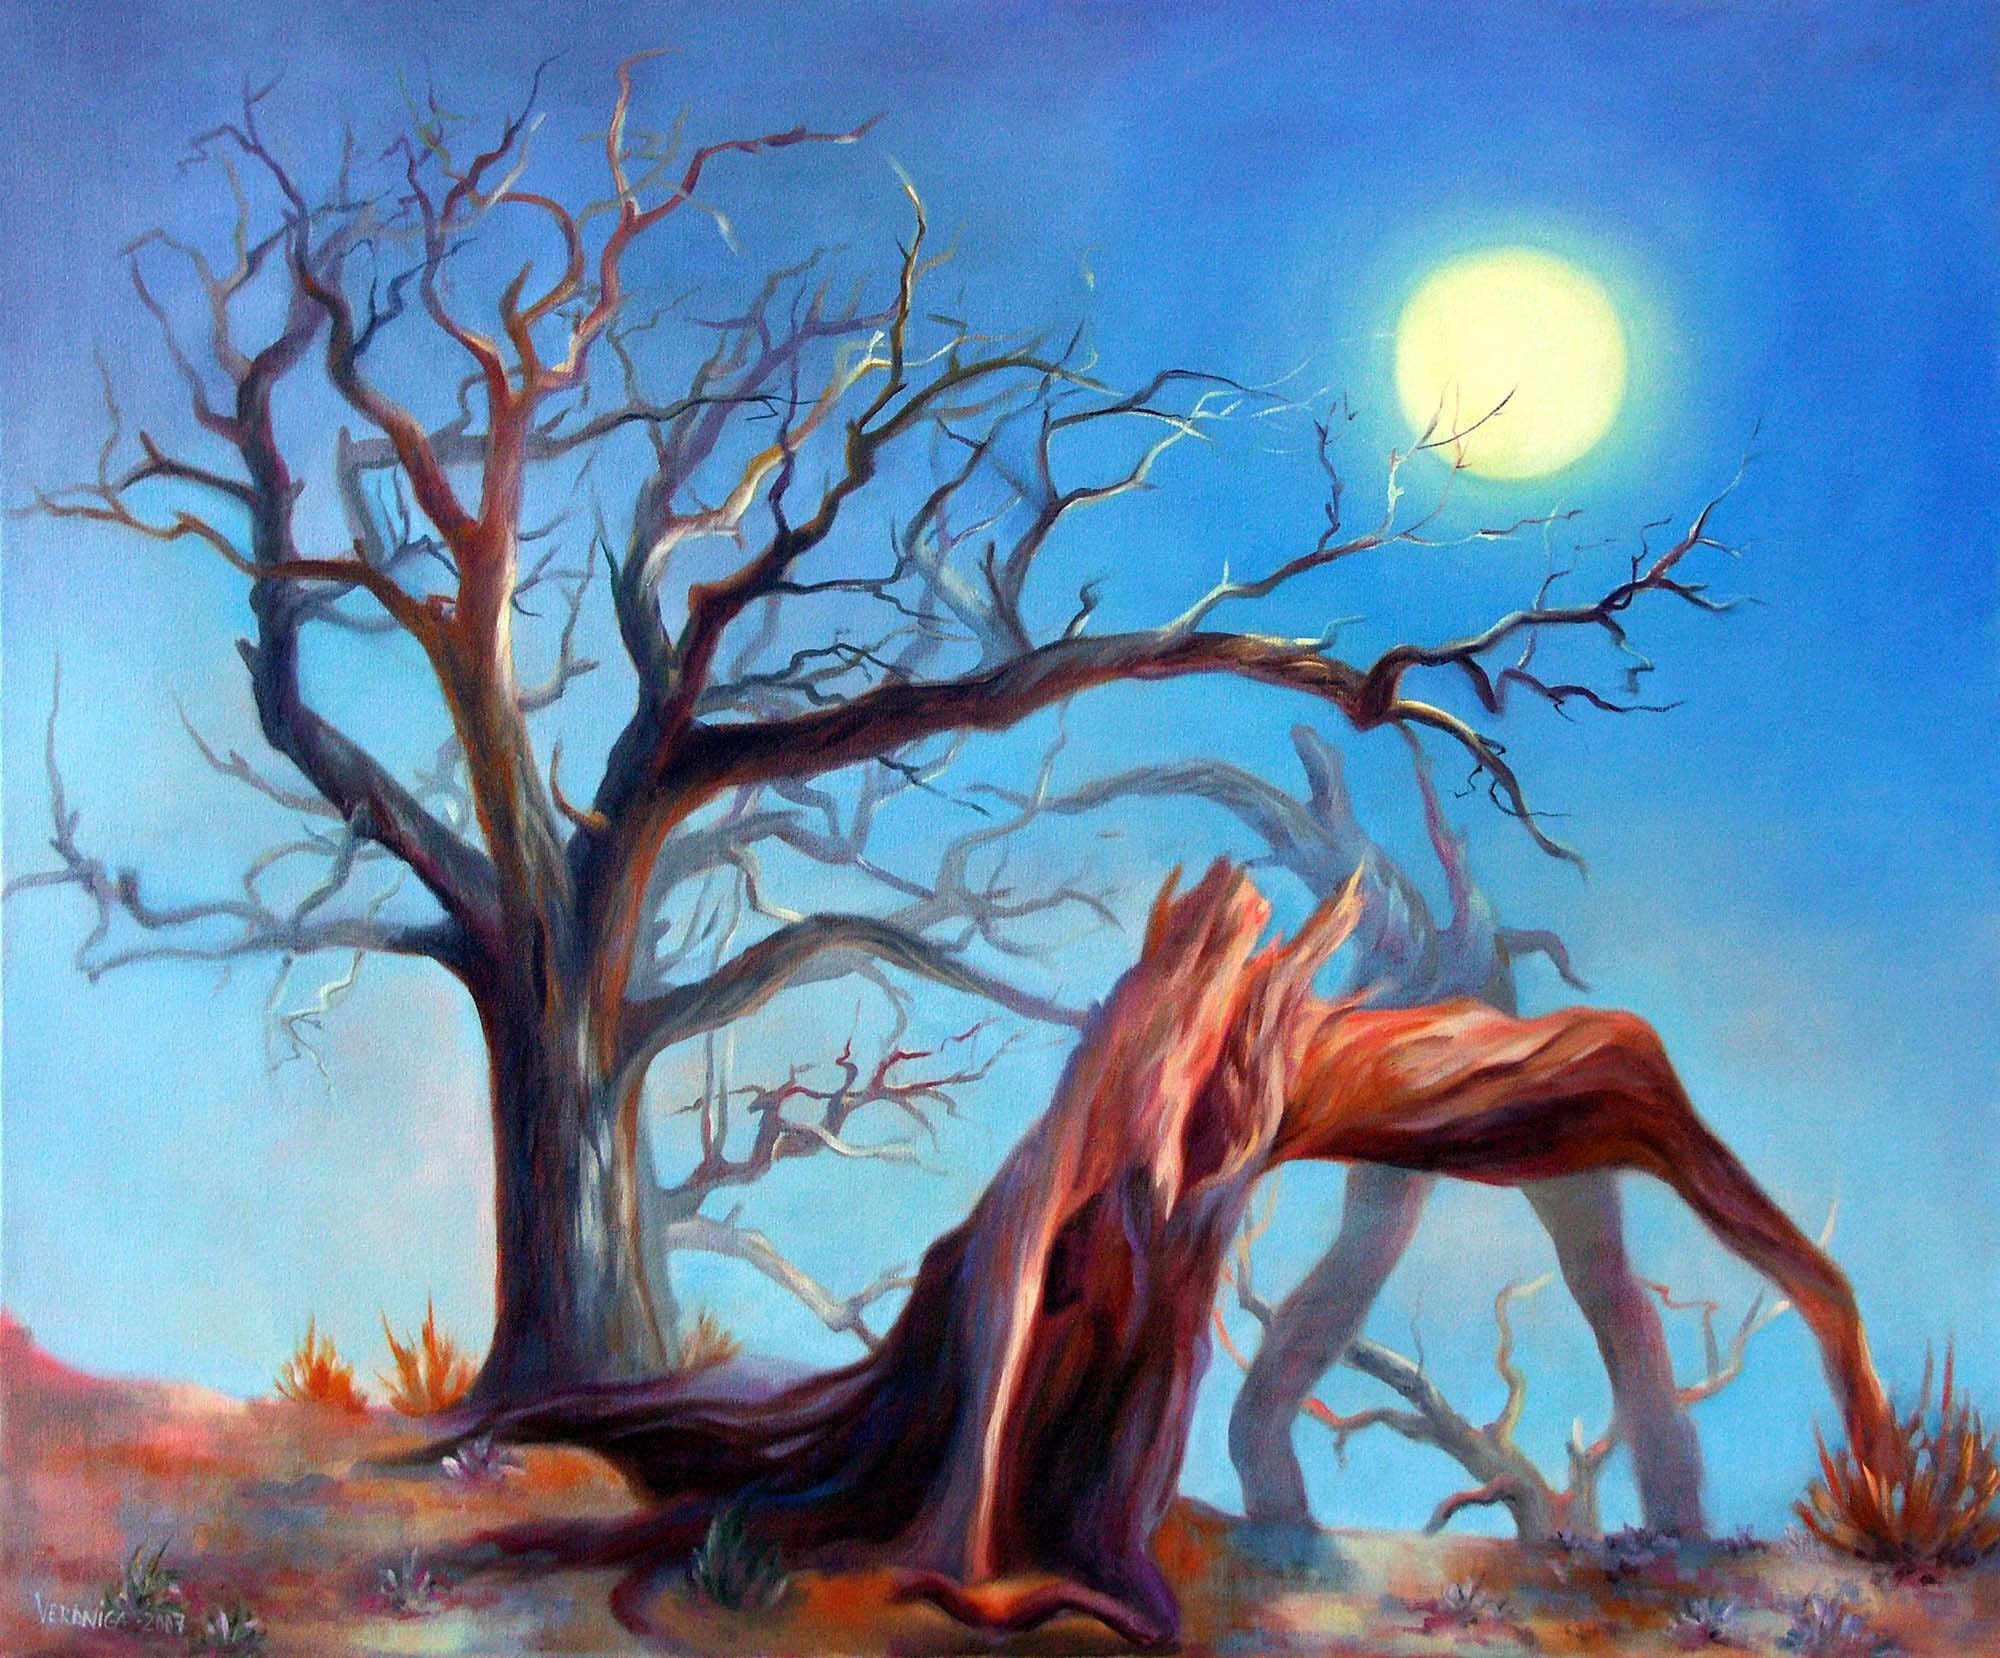  surrealist tree with the moon 16x20 glossy metallic print